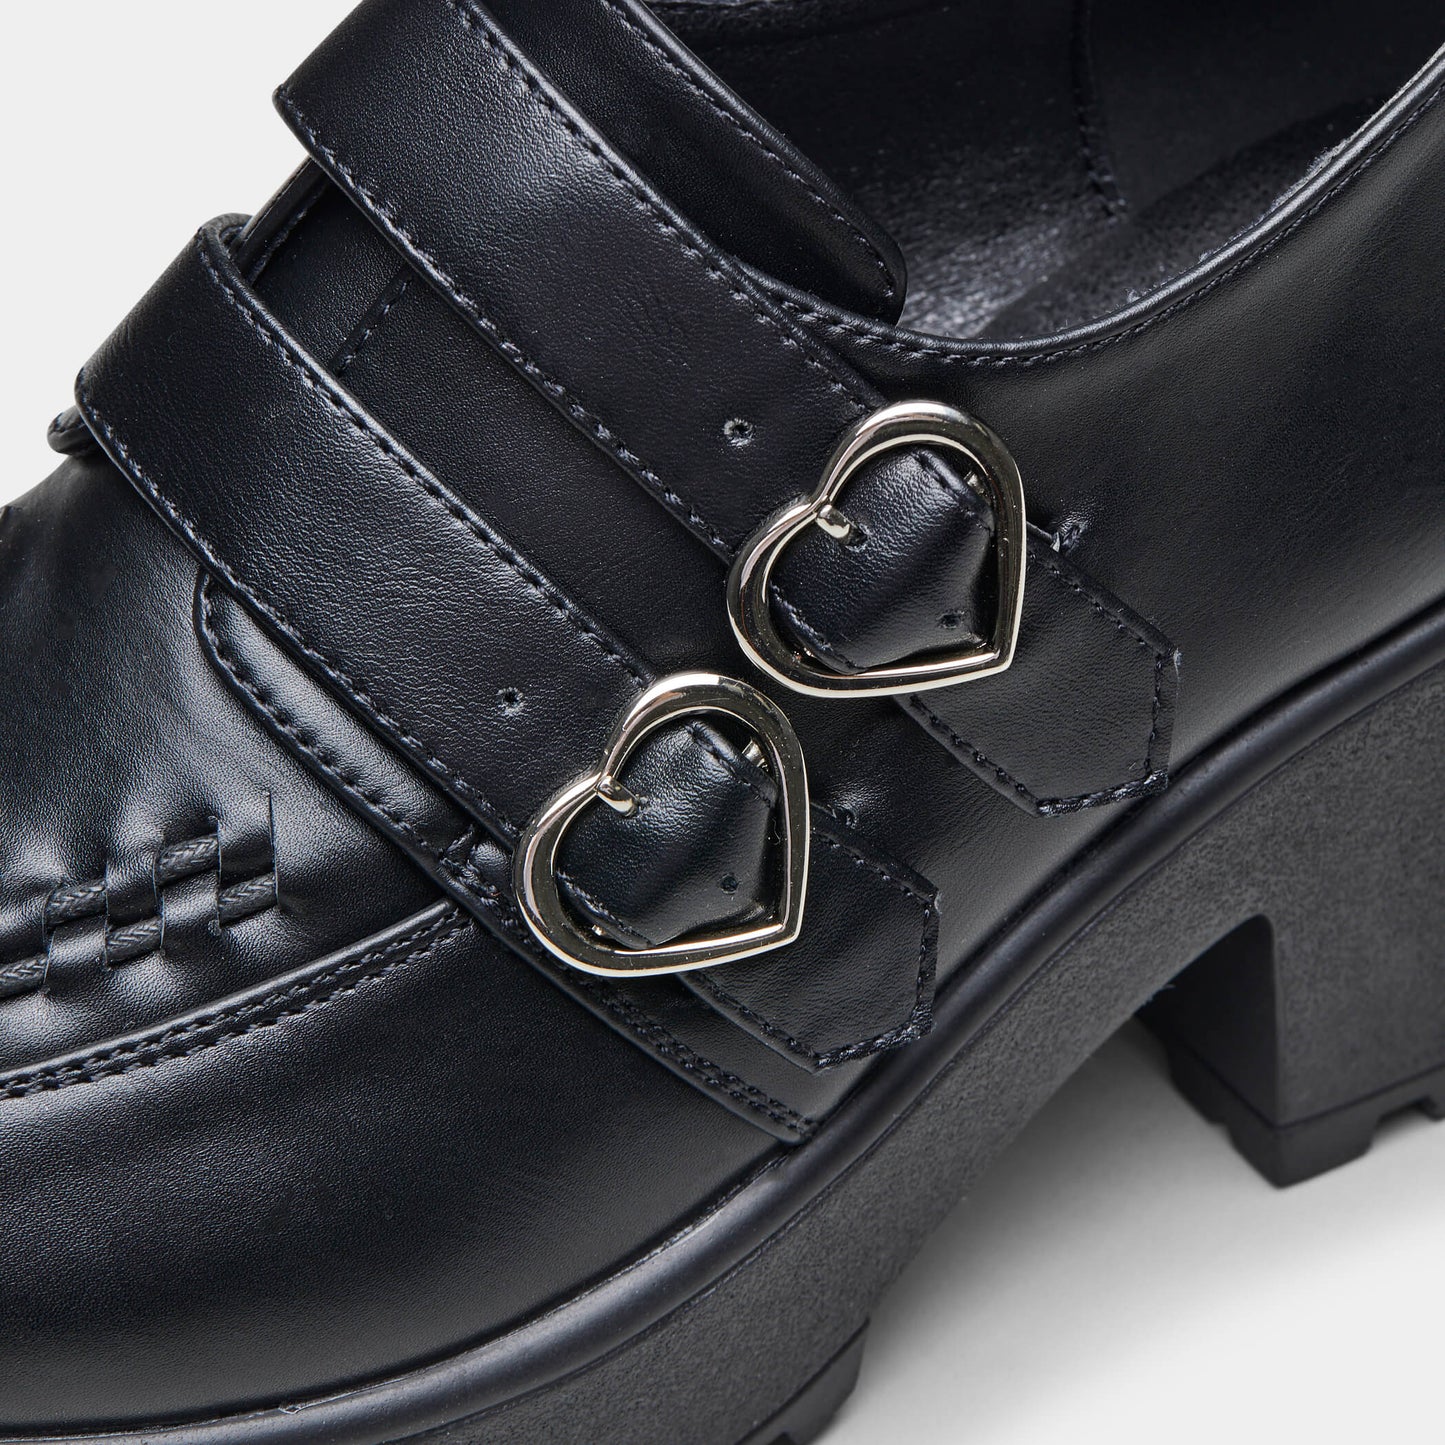 IAGO Metal Heart Oxford Platform Shoes - Shoes - KOI Footwear - Black - Buckle Detail